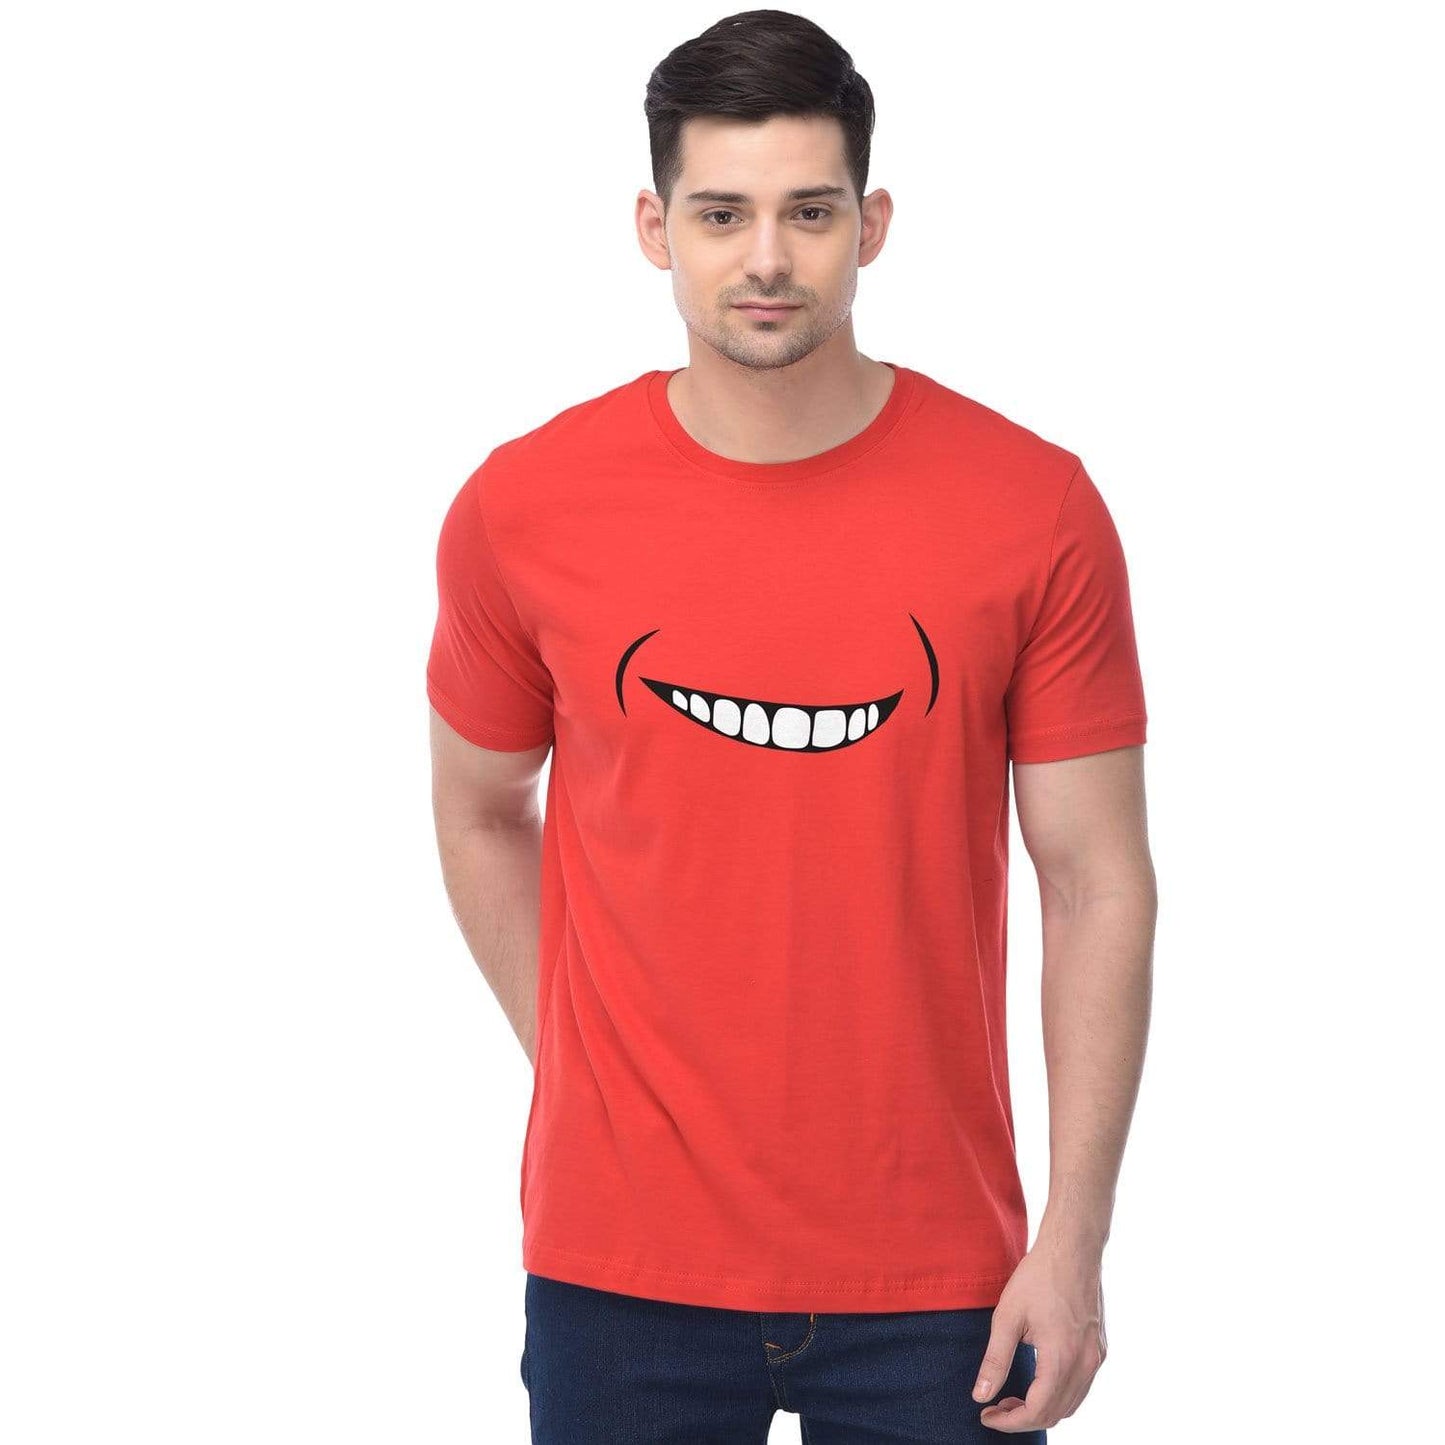 Sonu ki Smile - Unisex Tshirt